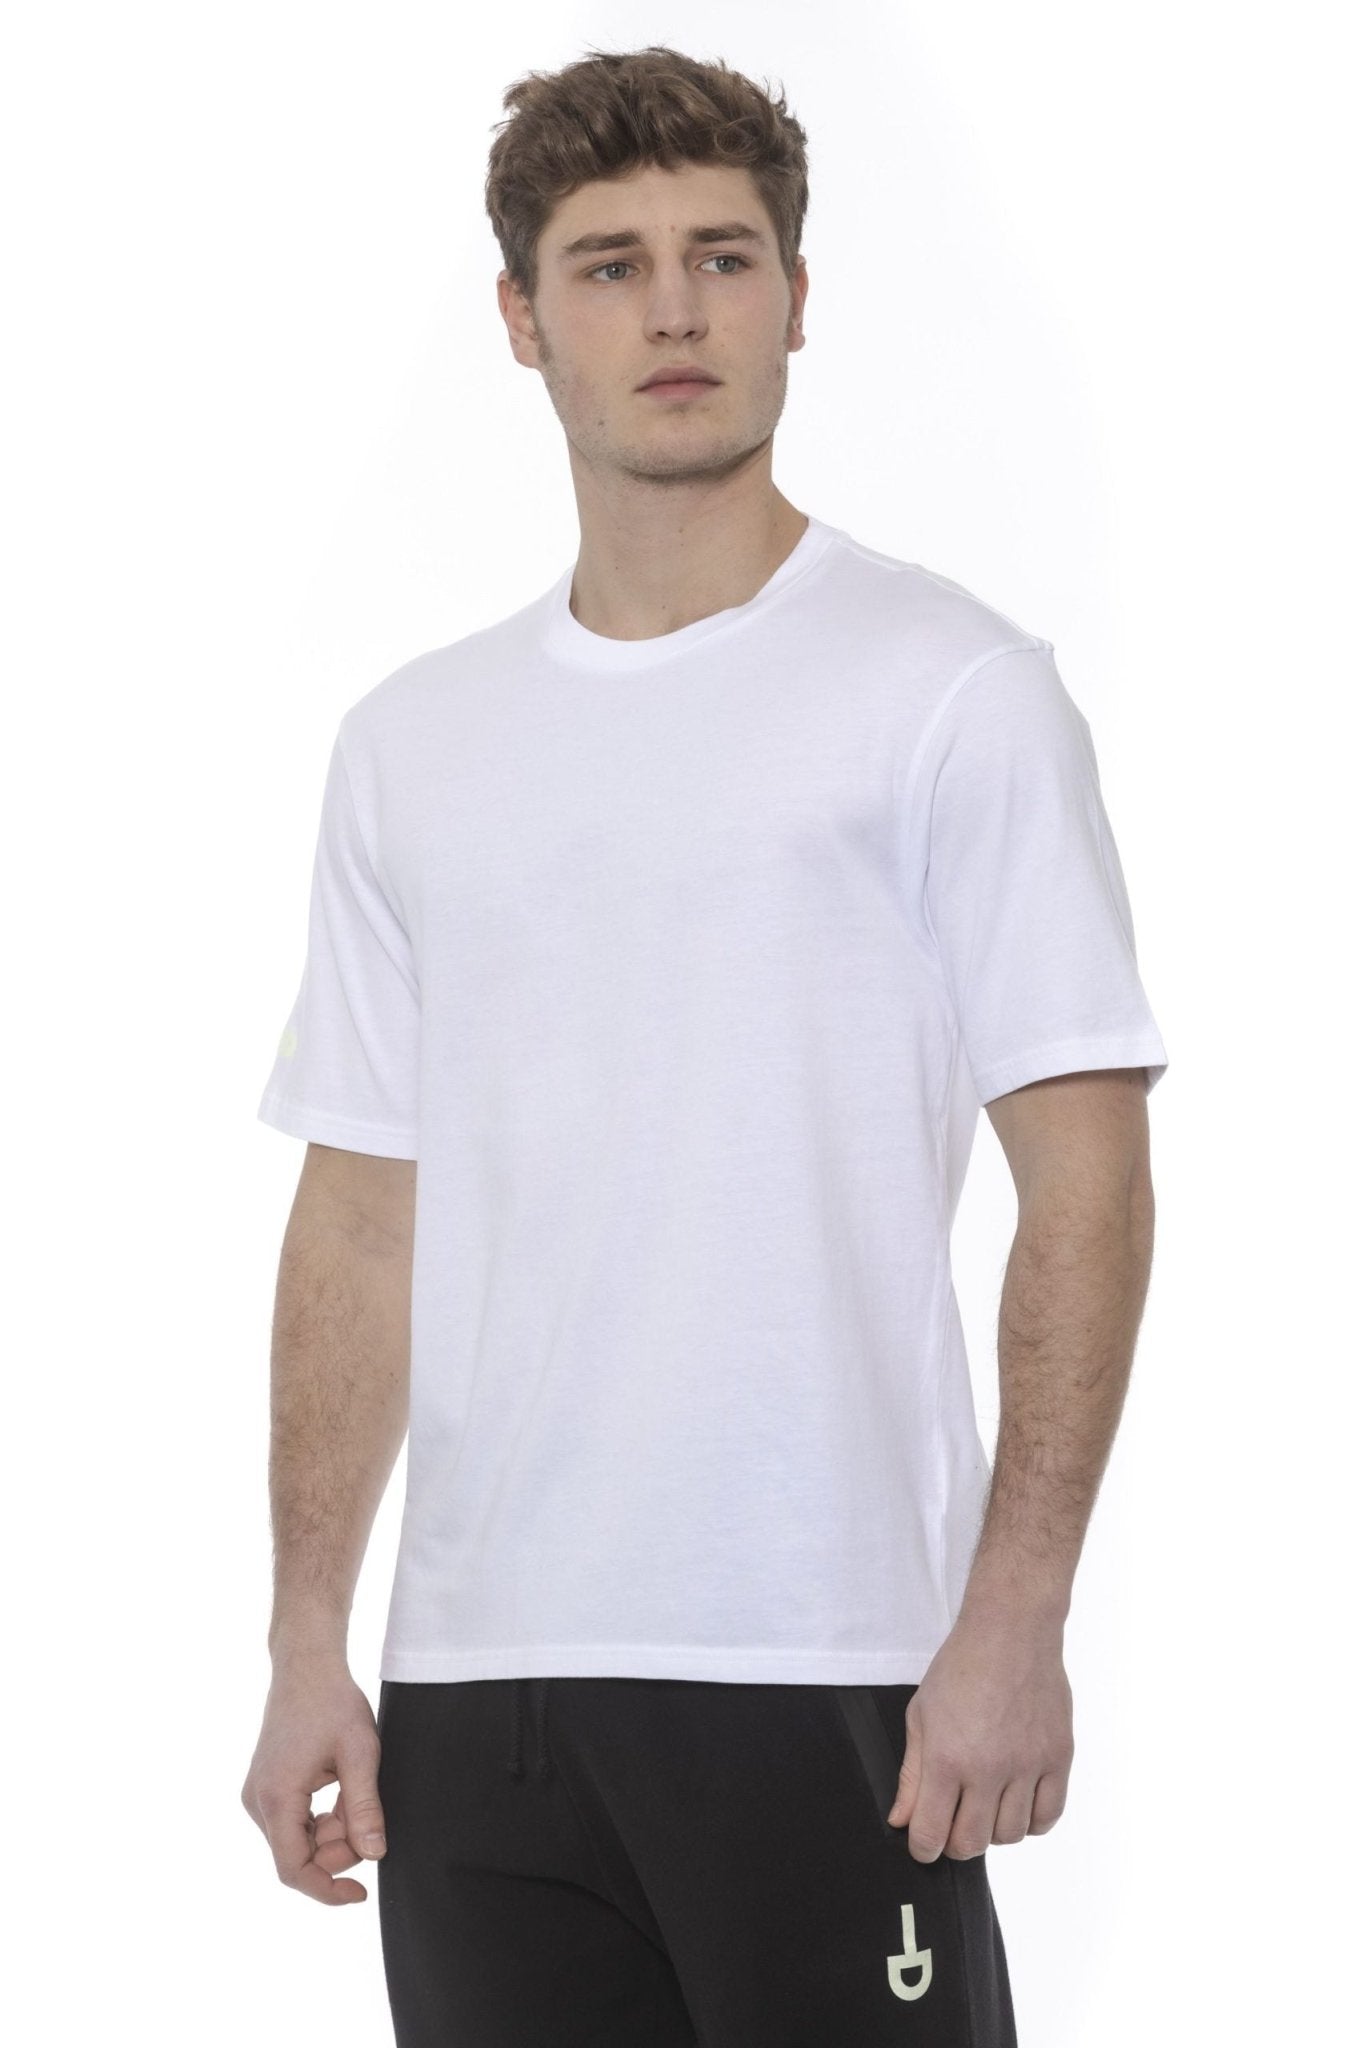 Tond White Cotton T-Shirt - Fizigo